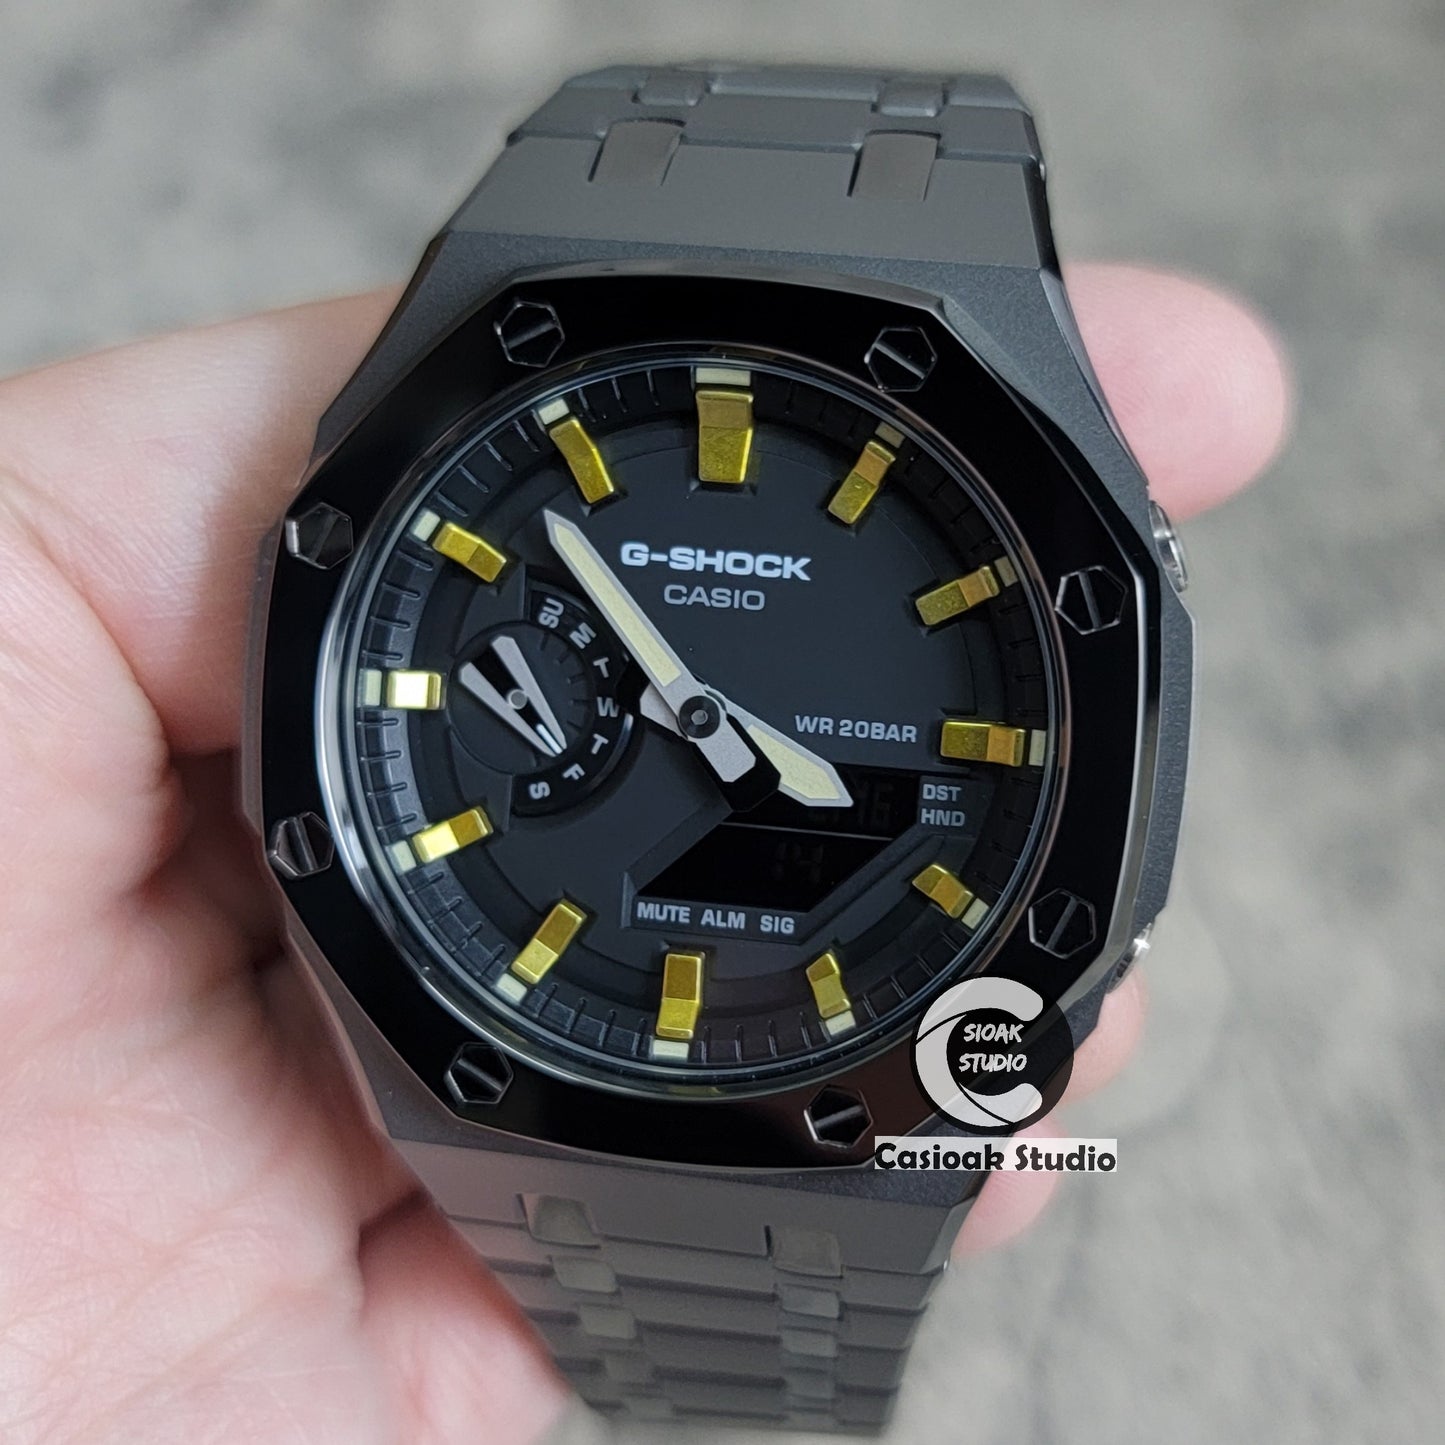 Casioak Mod Watch Polished Grey Case Metal Strap Gold Time Mark Black Dial 44mm - Casioak Studio